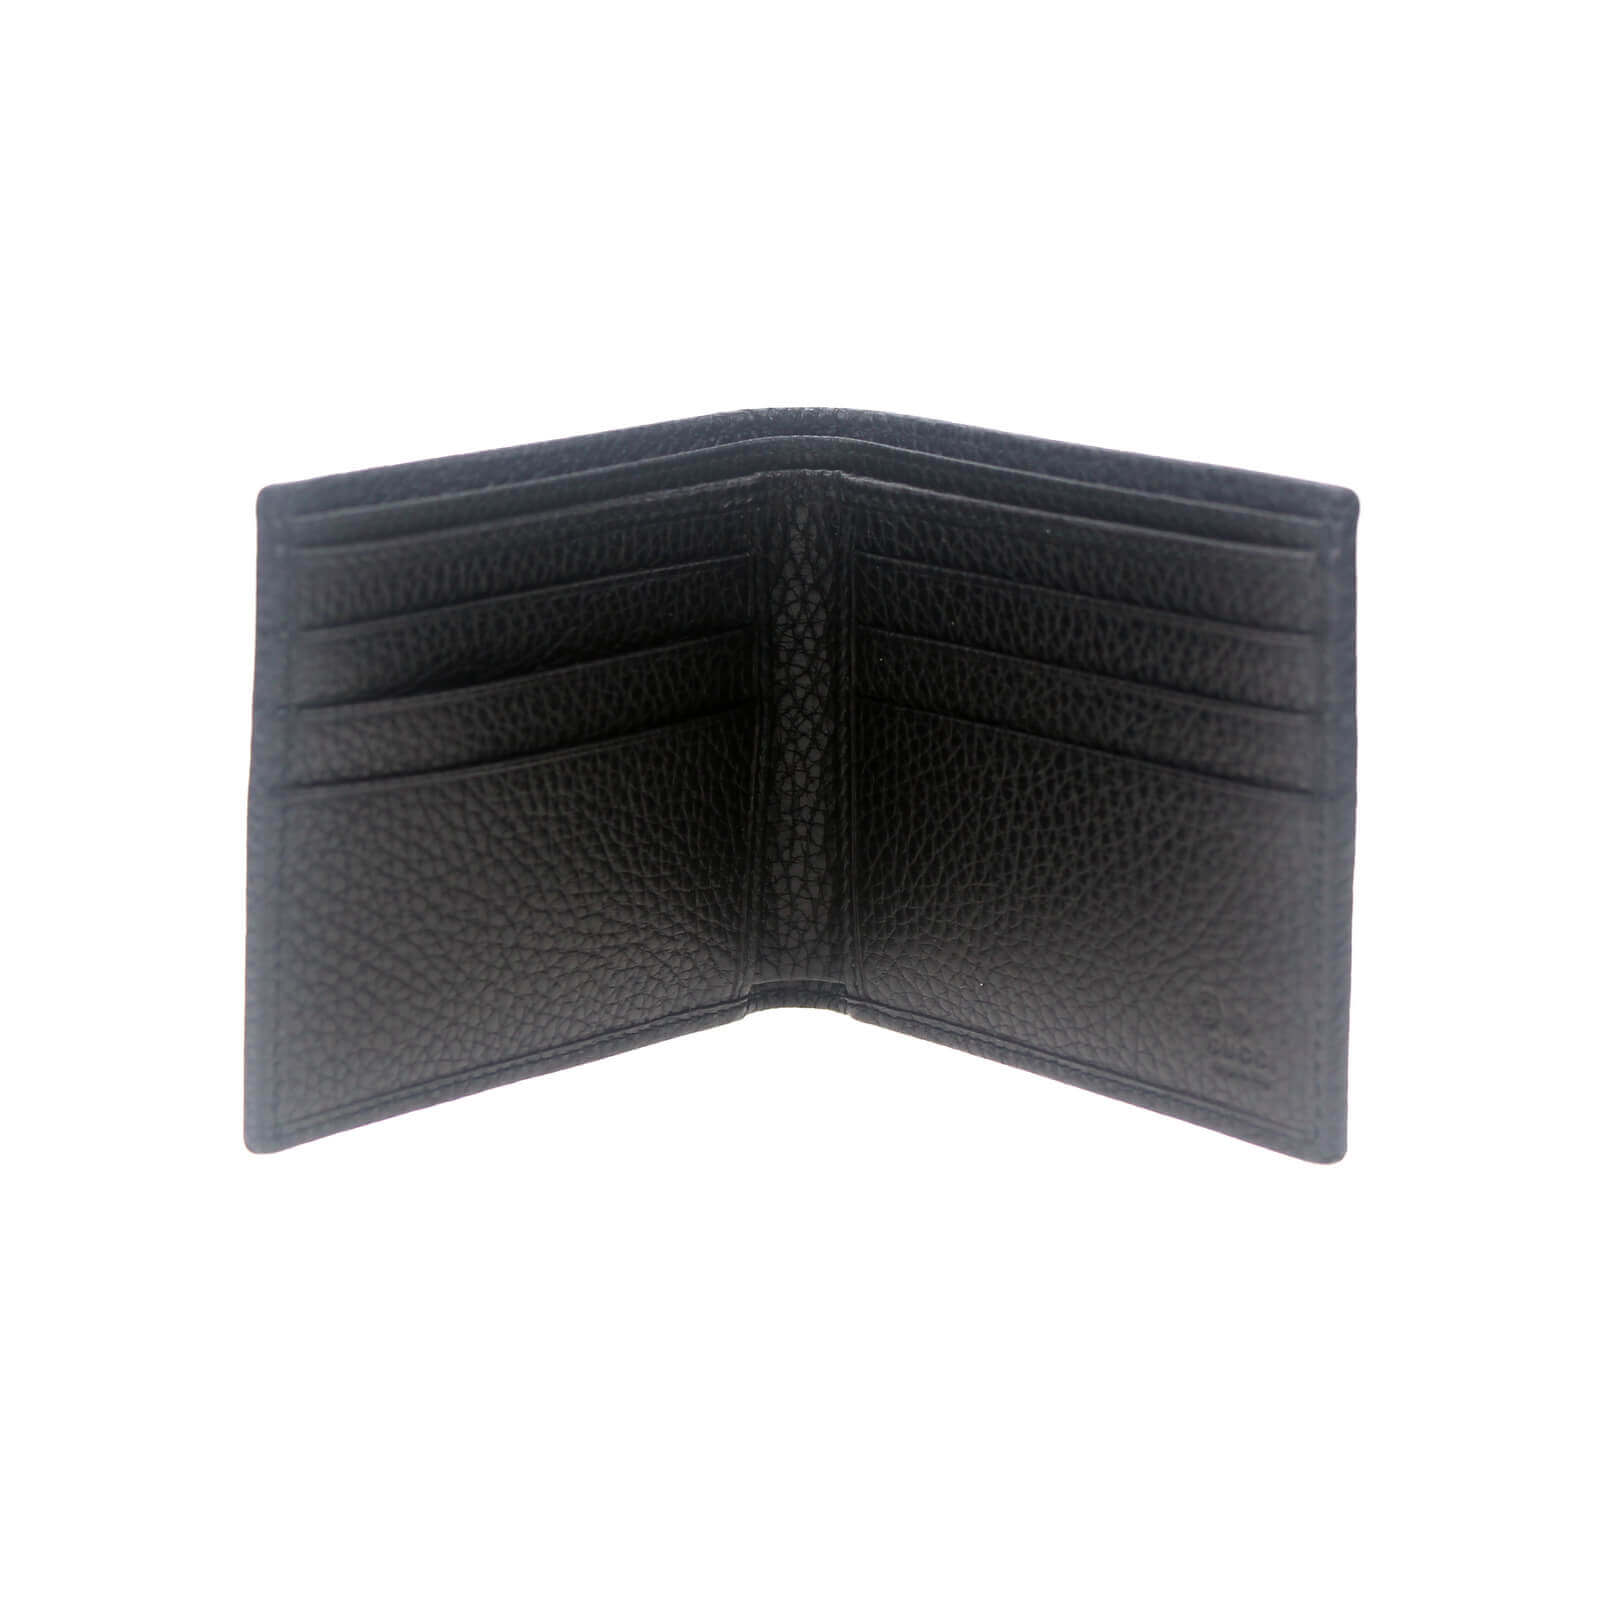 Gucci Web Stripe Leather Wallet in Black for Men